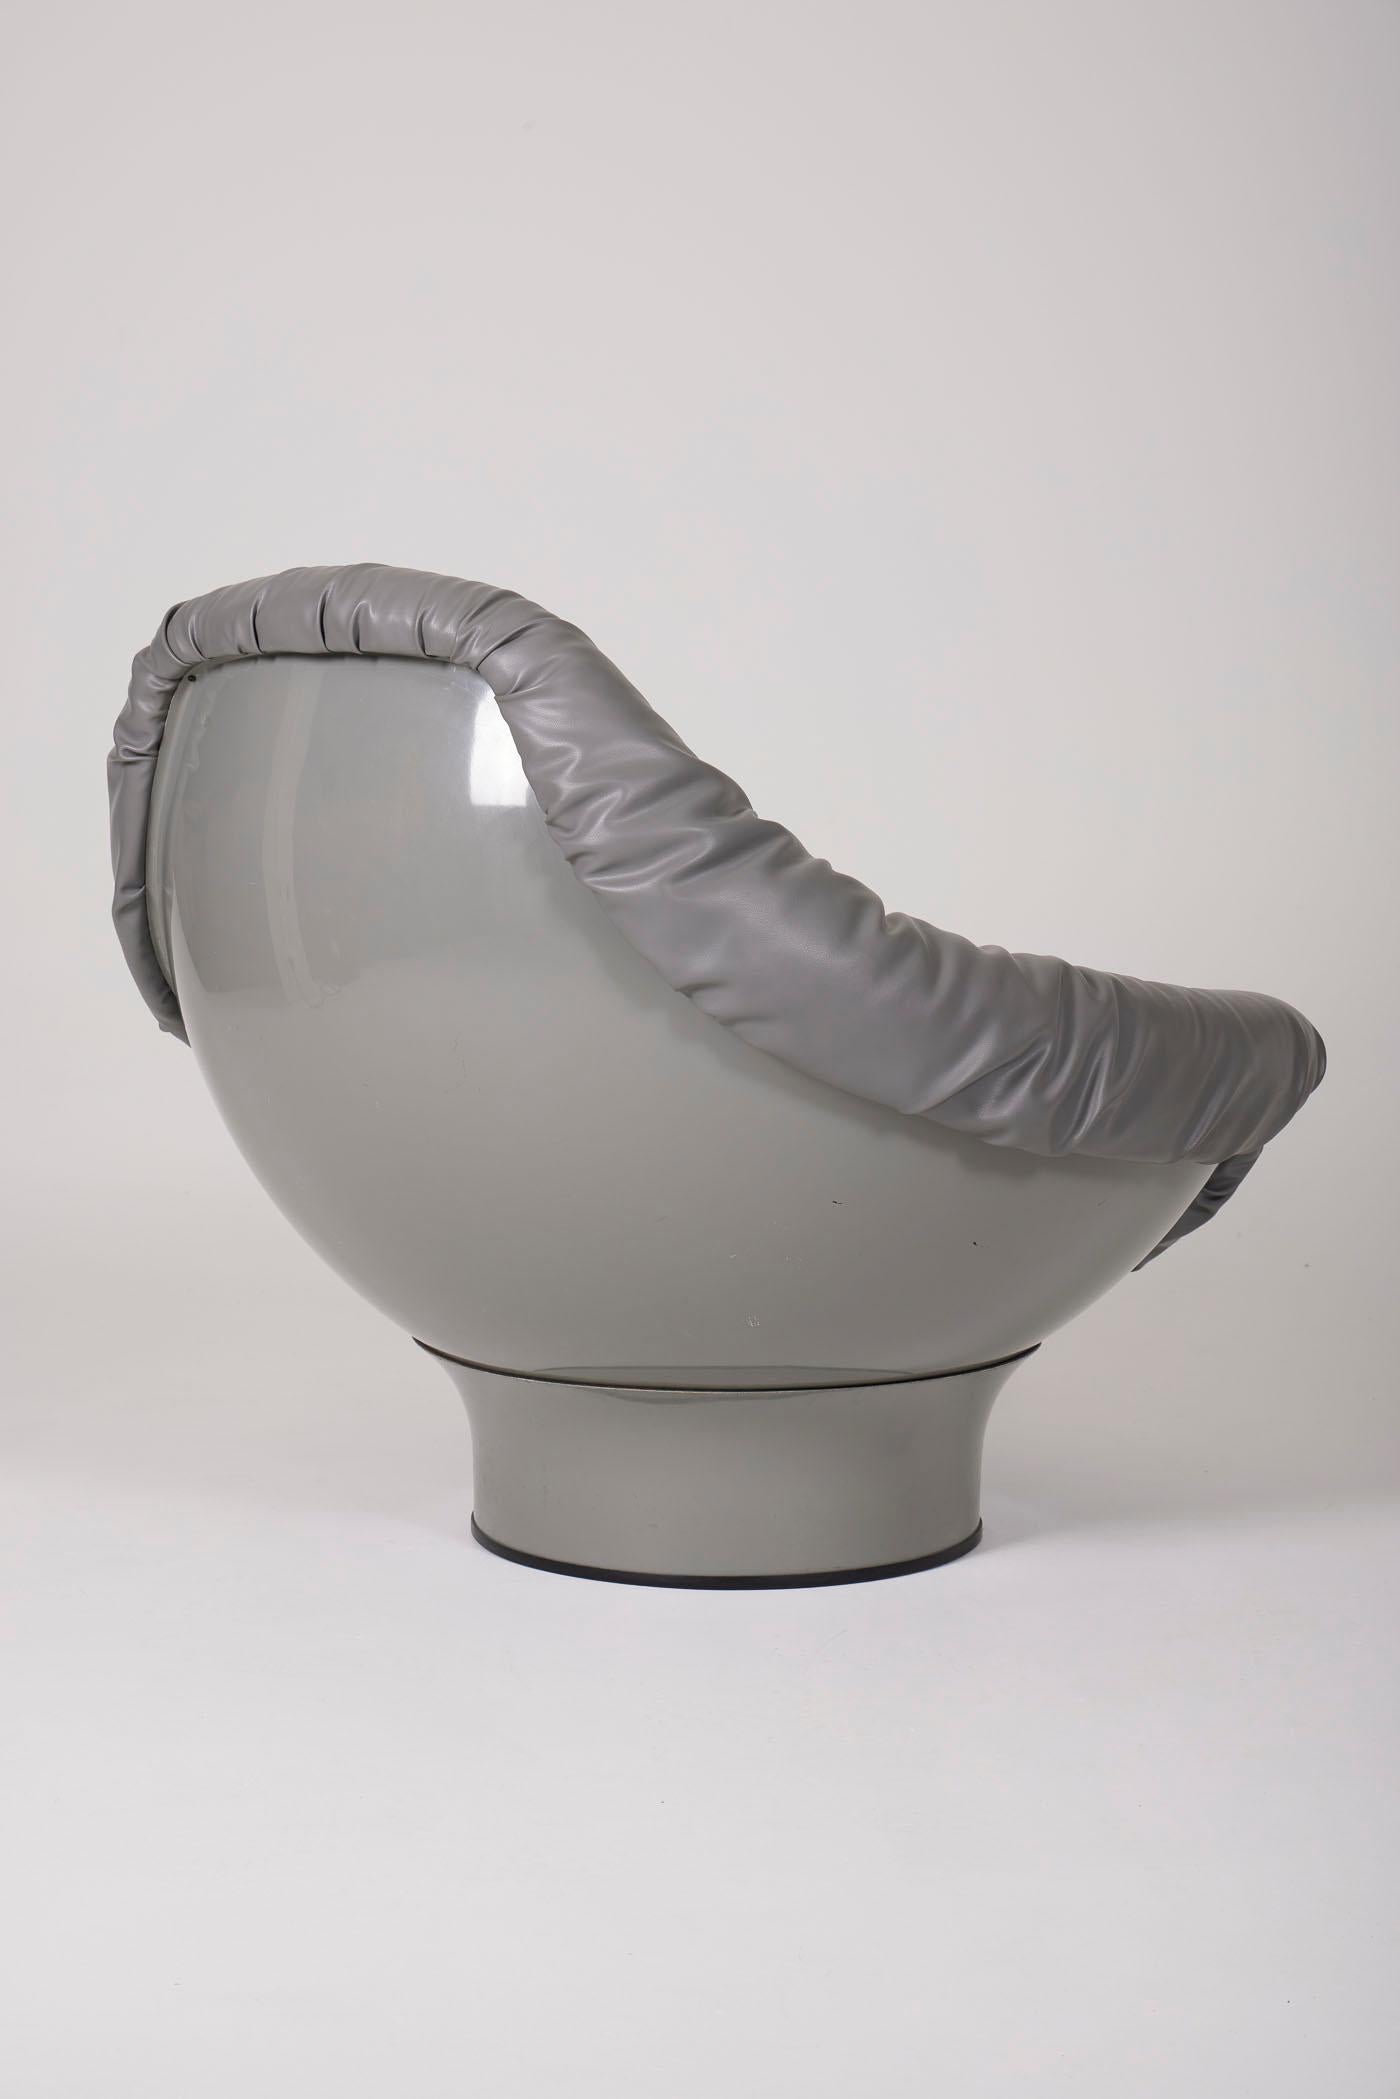 Mario Brunu armchair In Good Condition For Sale In PARIS, FR